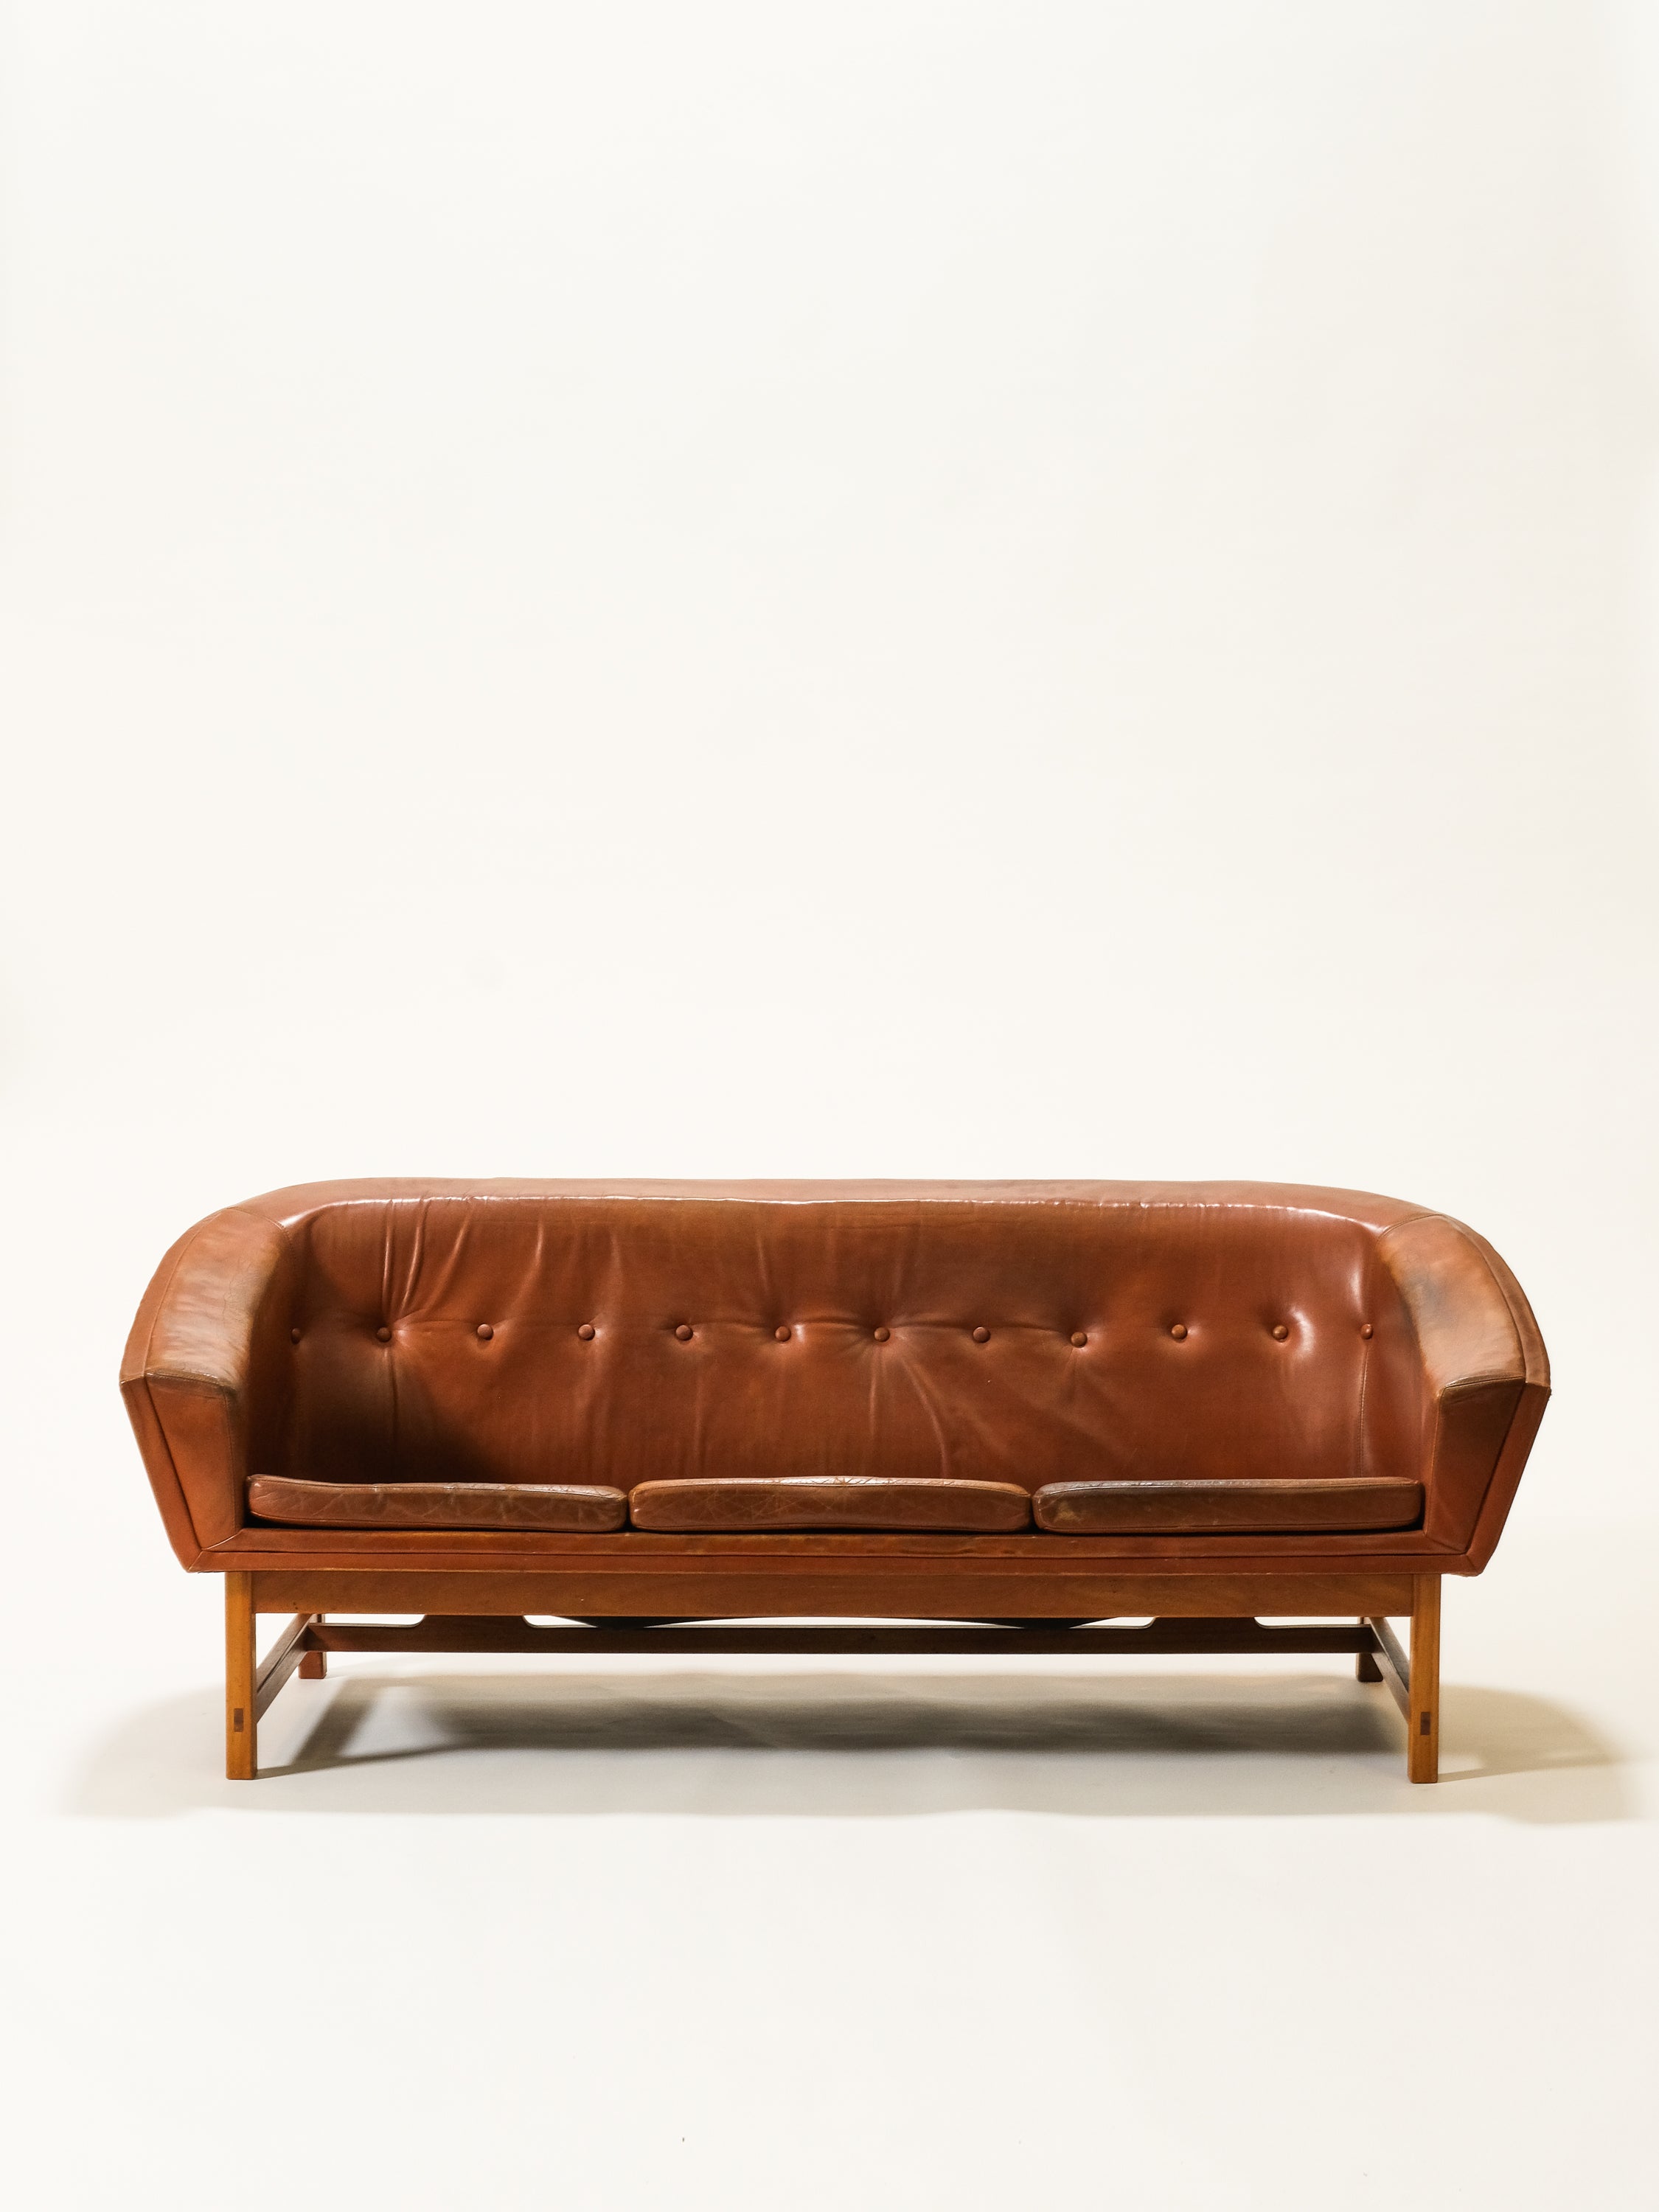 Model "Corona" Leather Sofa by Lennart Bender for Ulferts Möbler, Sweden, 1960s